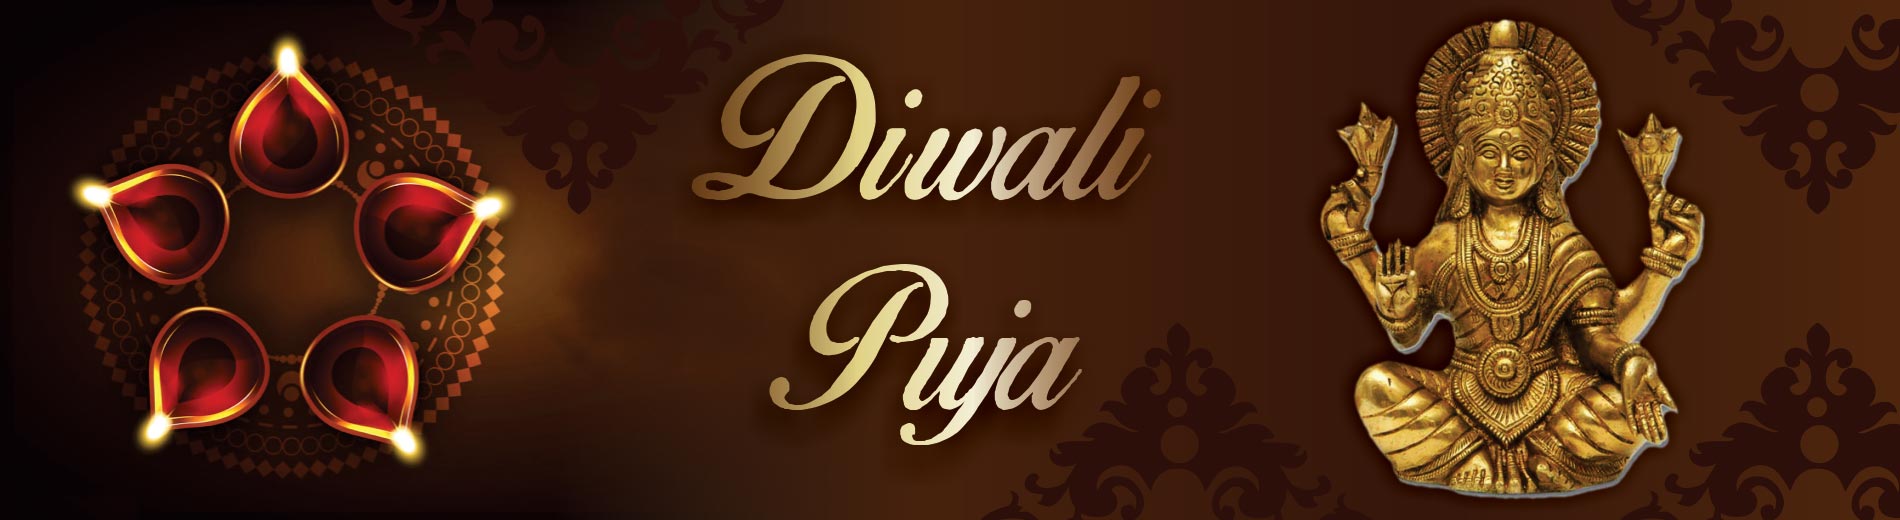 Diwali Puja Vidhi or Laxmi Puja Vidhi